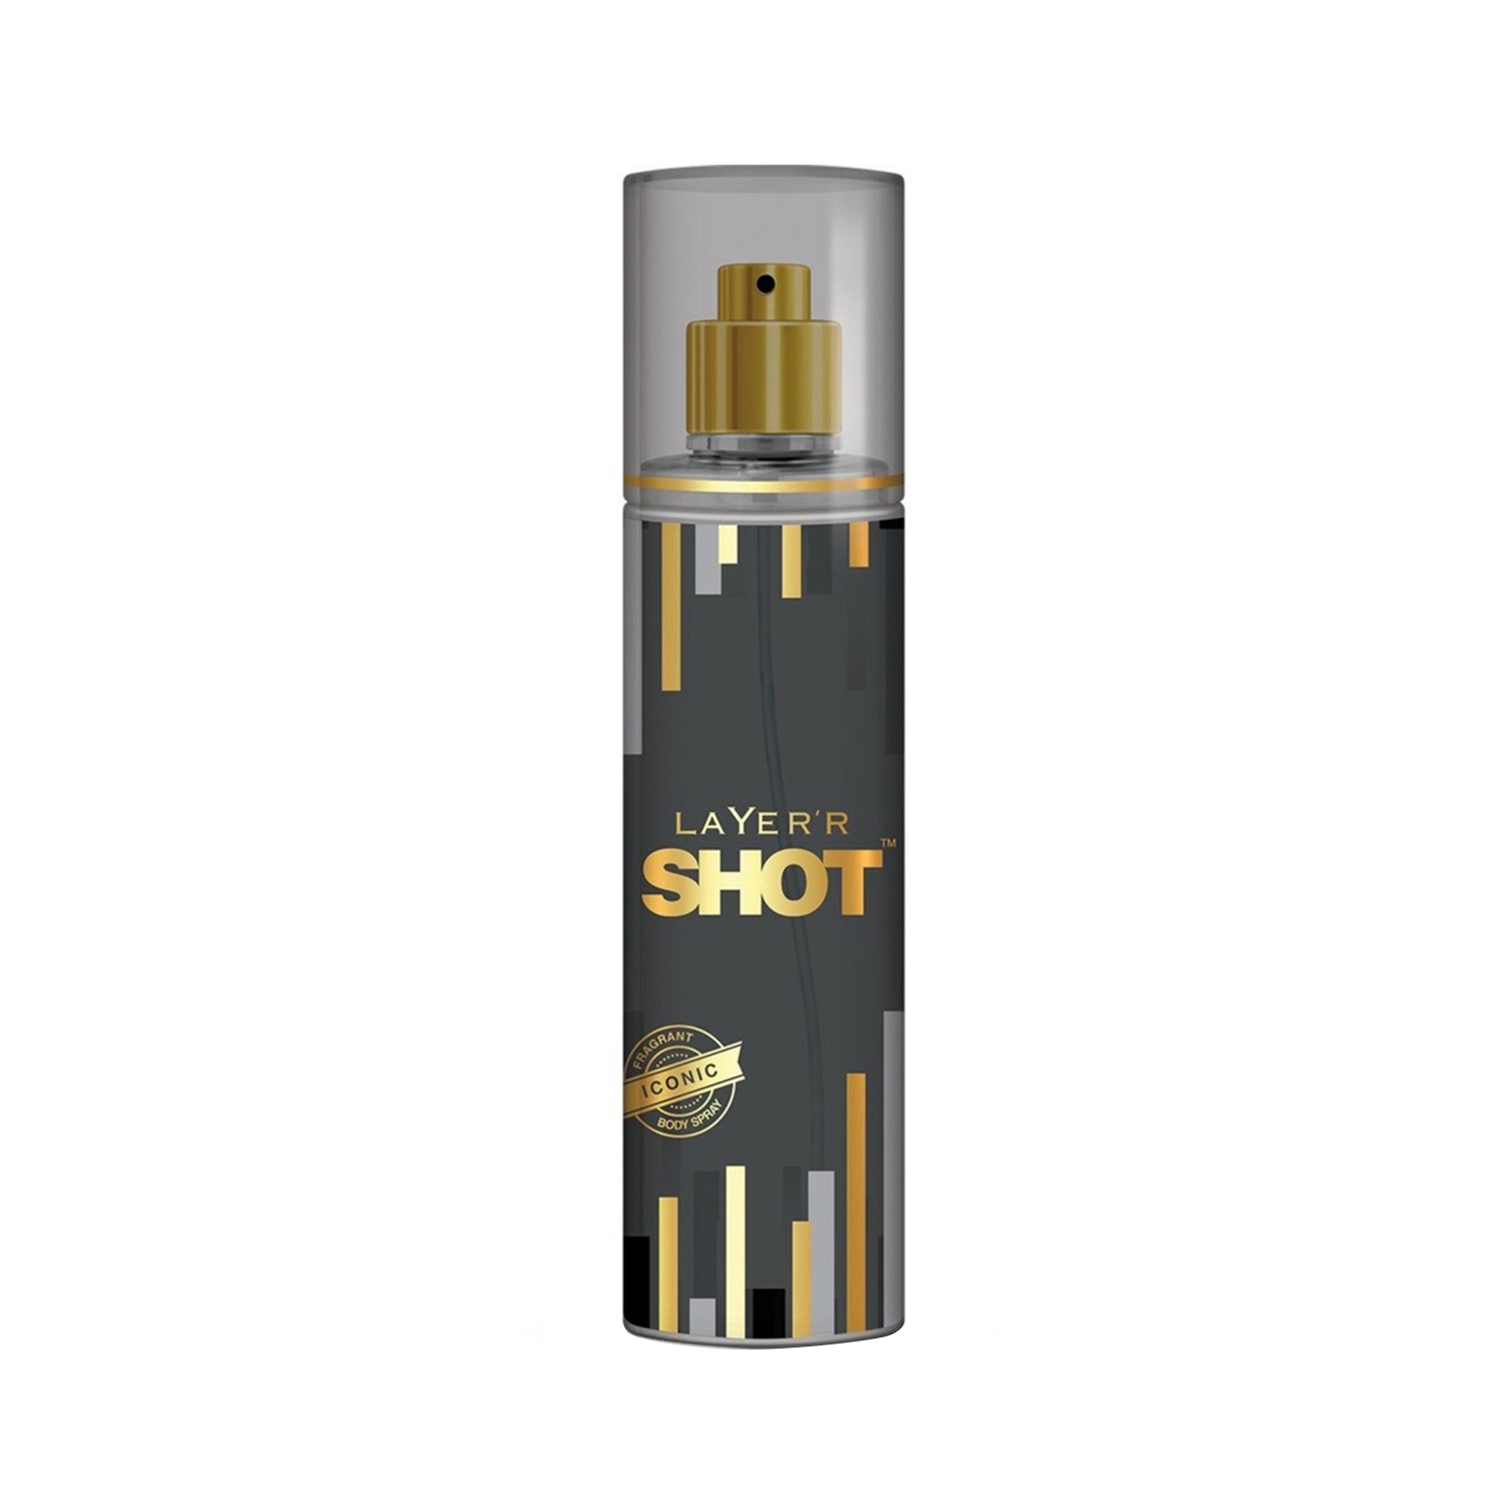 Layer'r Shot | Layer'r Shot Gold Iconic Body Spray (150ml)